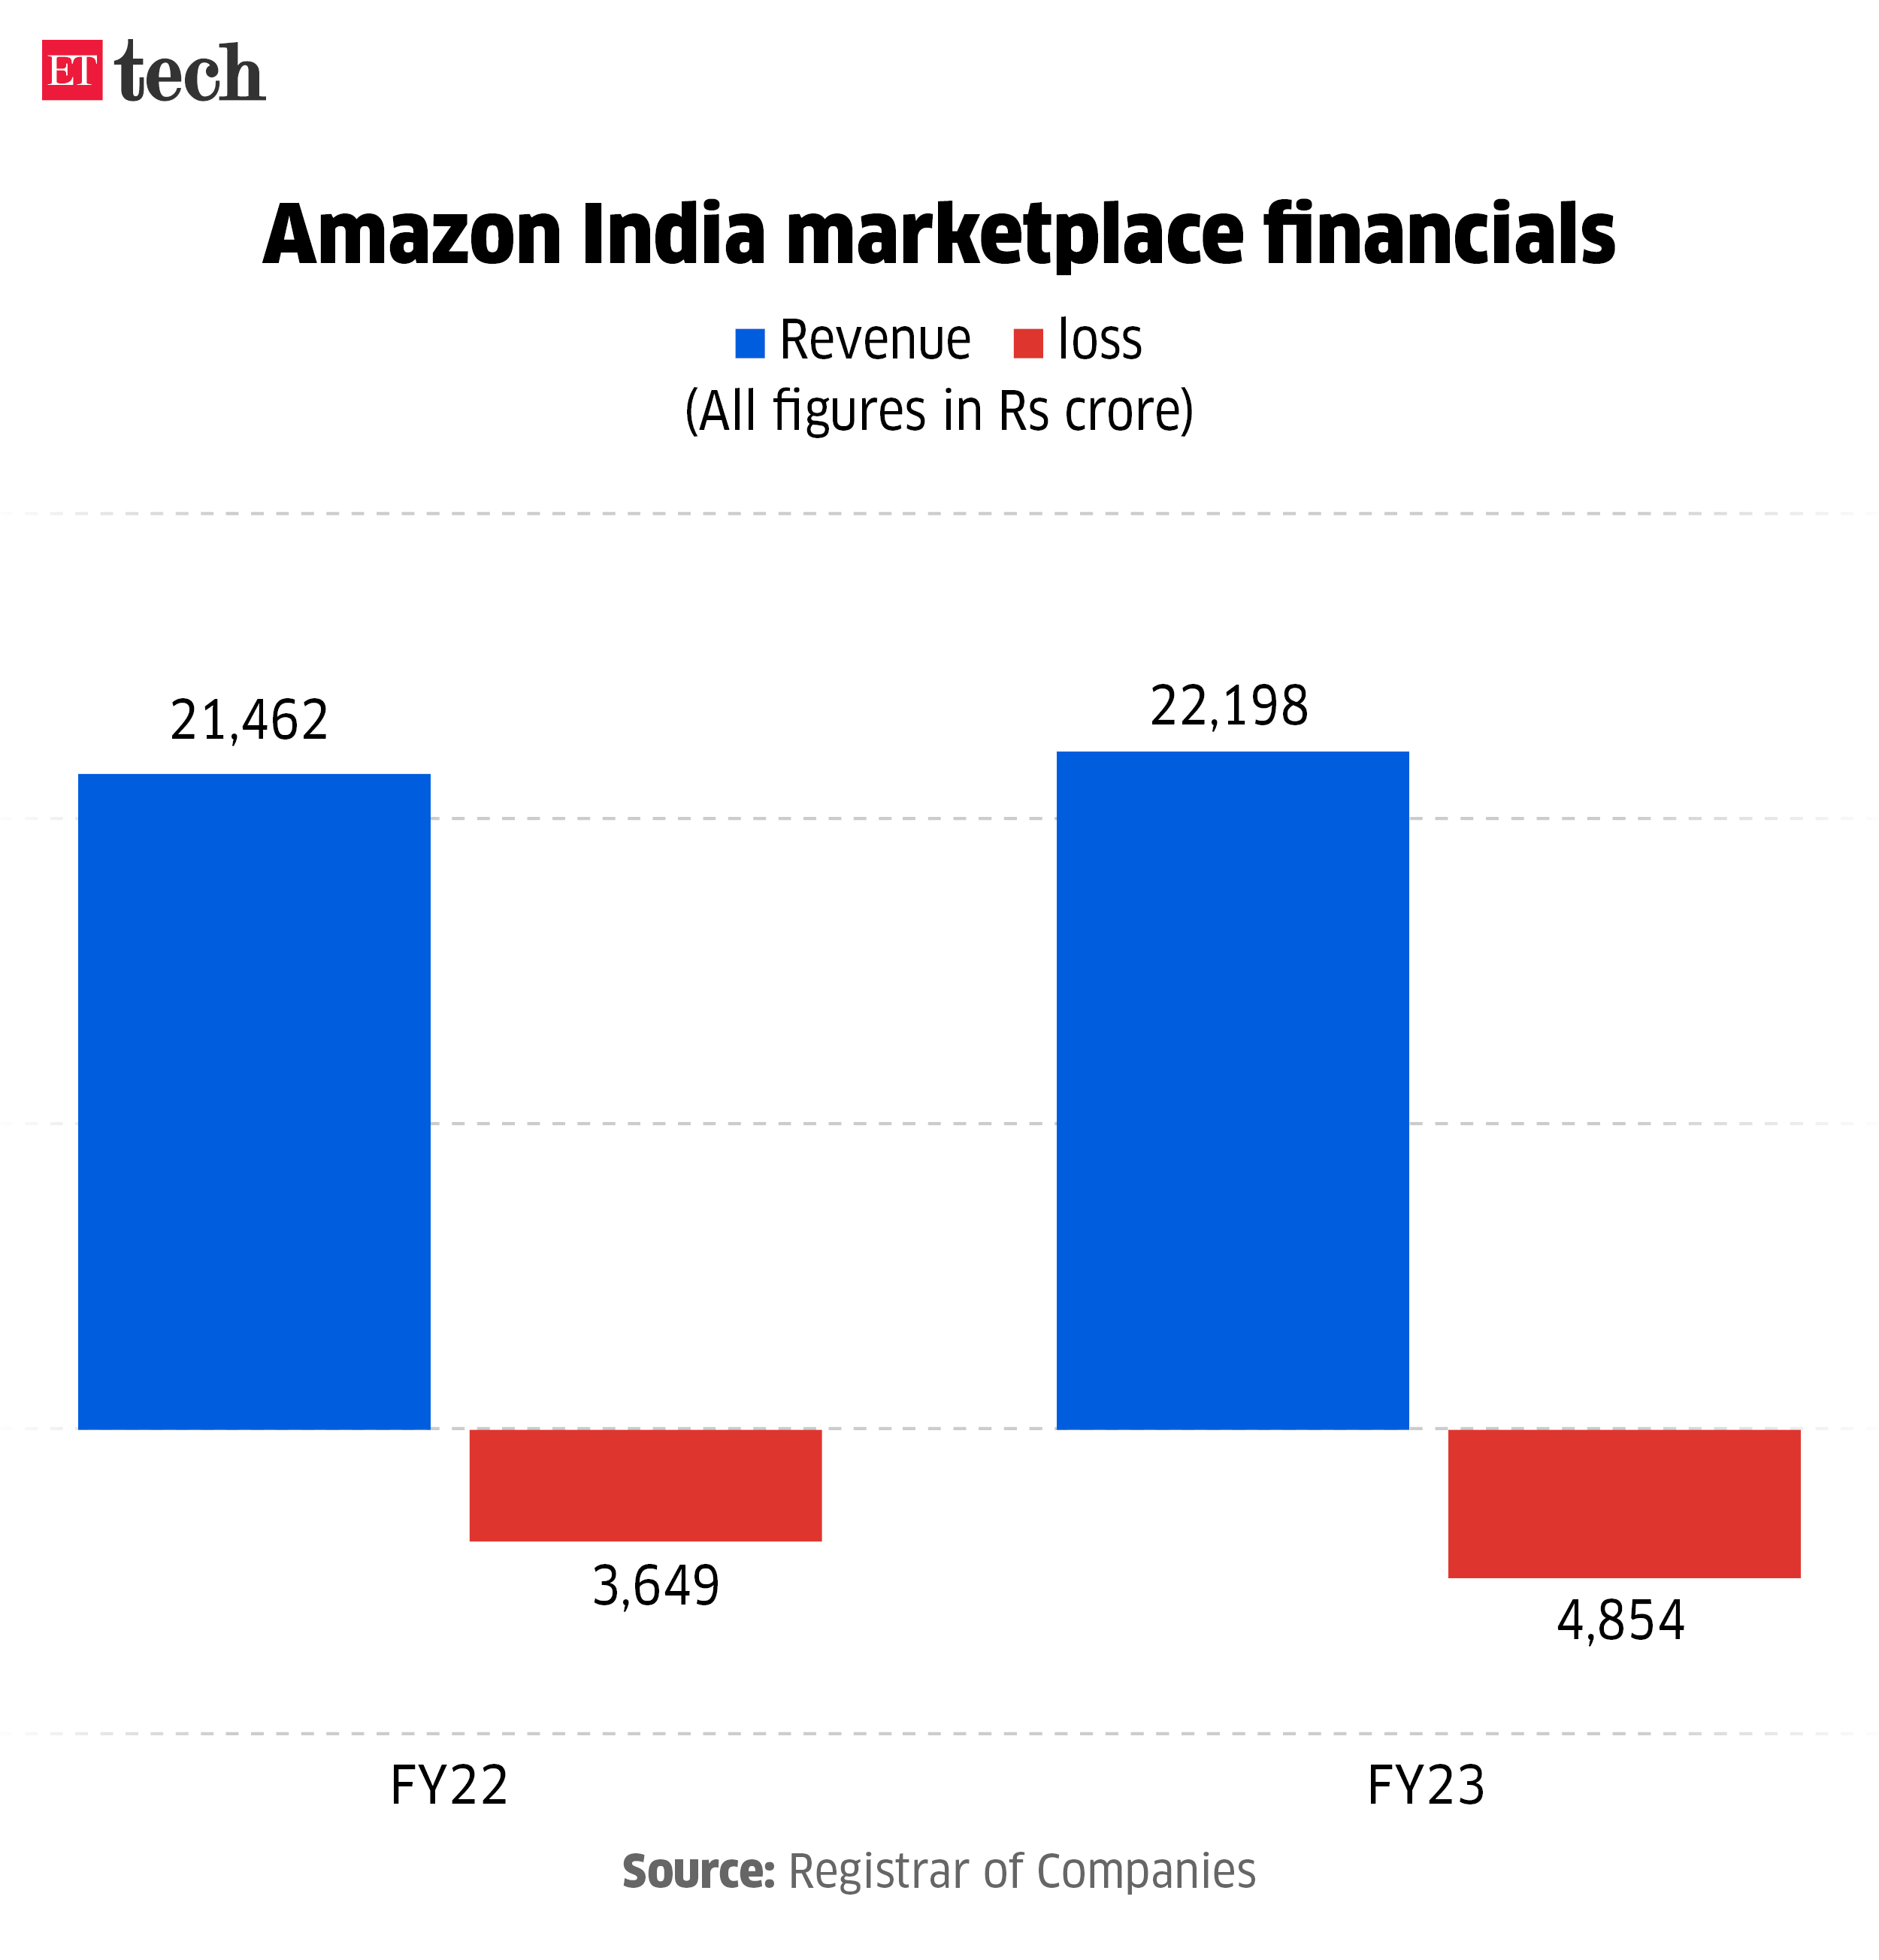 Amazon India marketplace financials